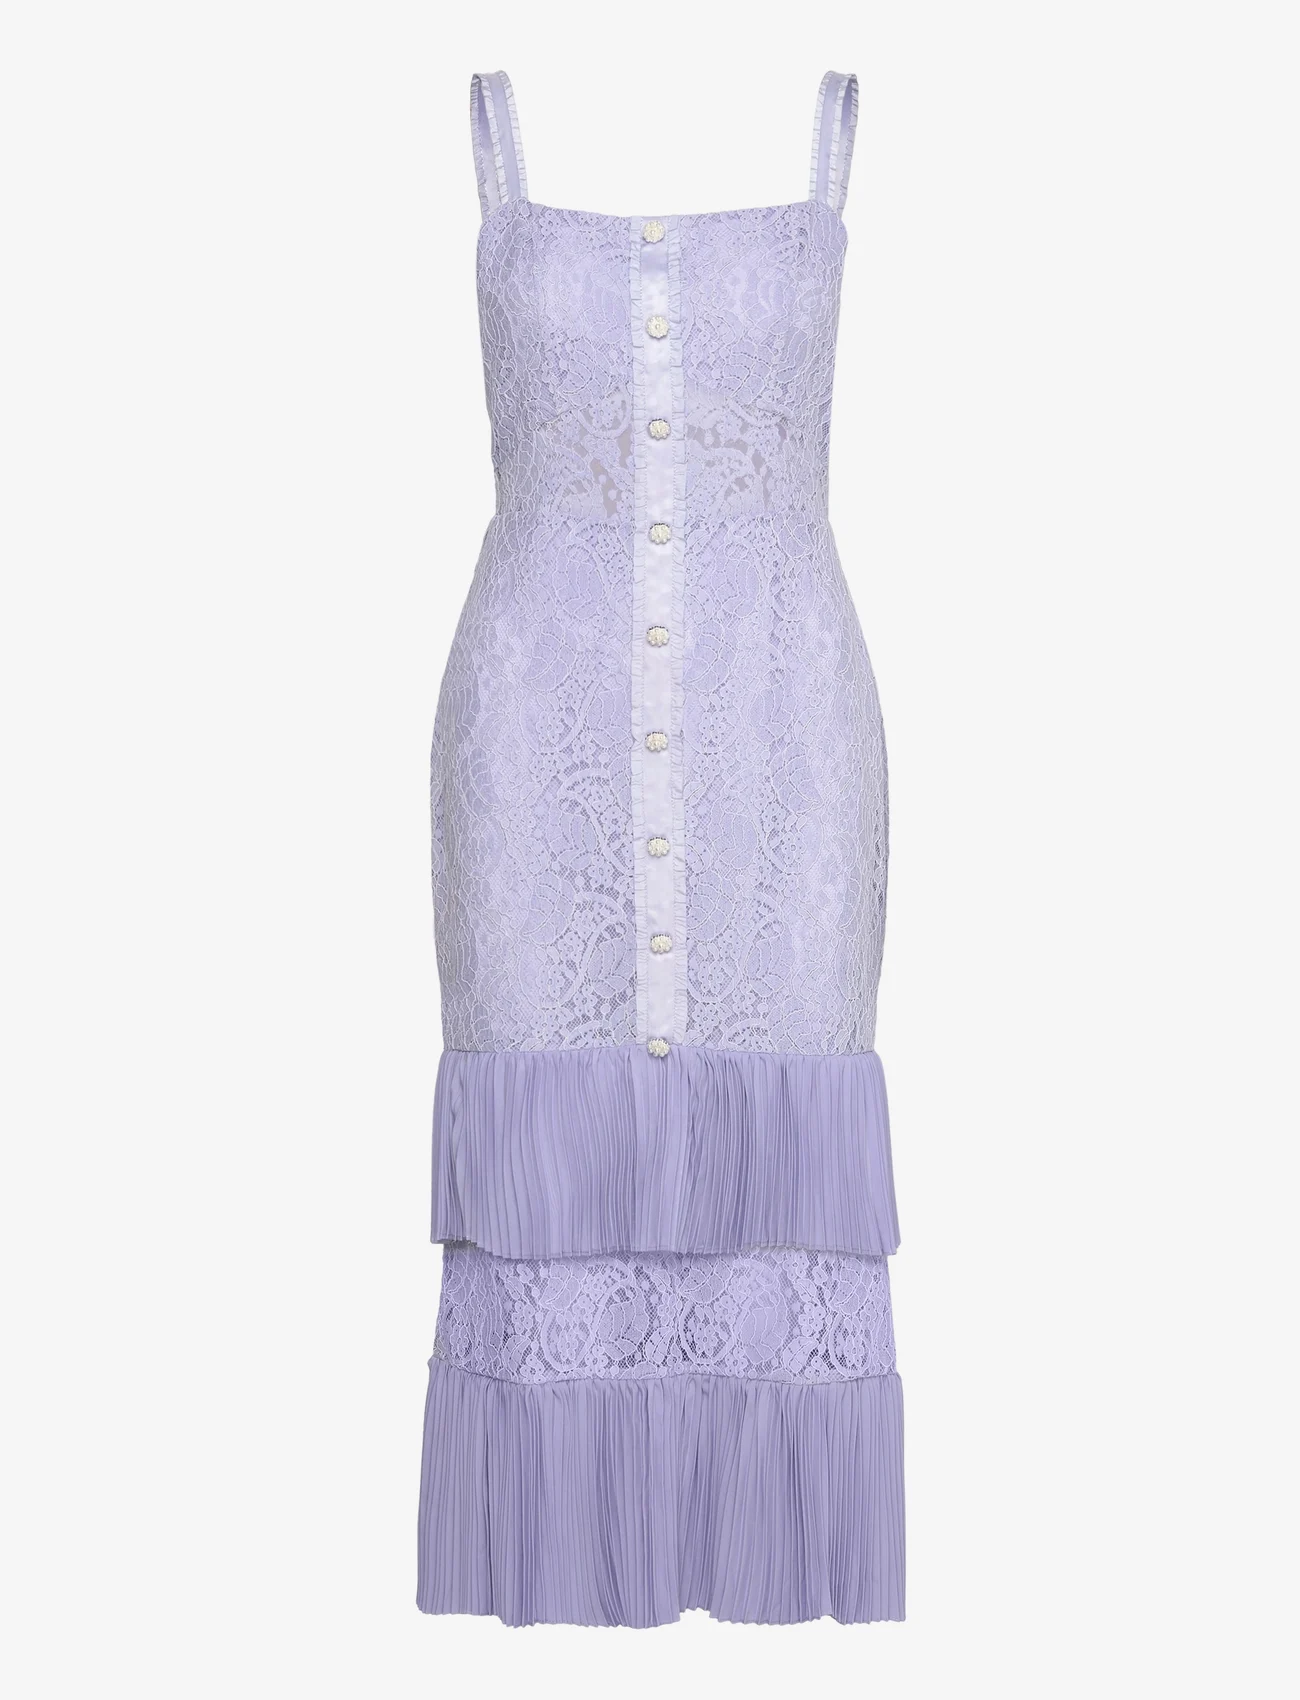 Love Lolita - Juniper dress - ballīšu apģērbs par outlet cenām - light blue lace - 0